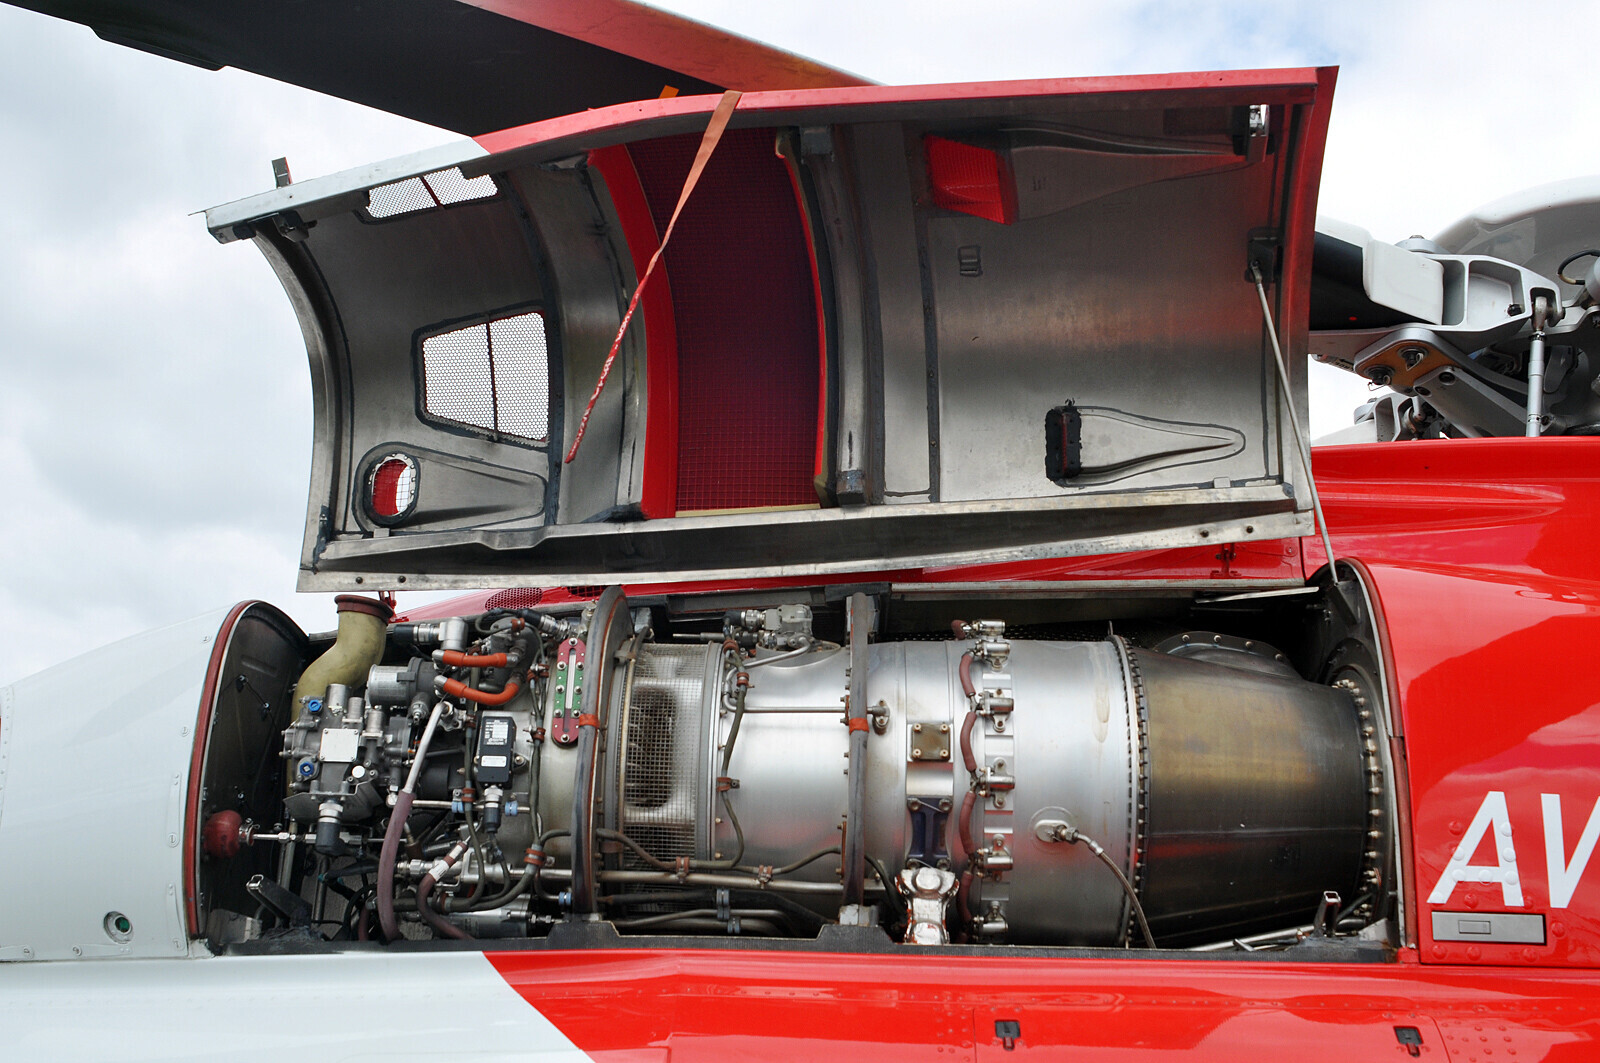 Exemplar de motor turboélice Pratt-Whitney RT6A-135A.

